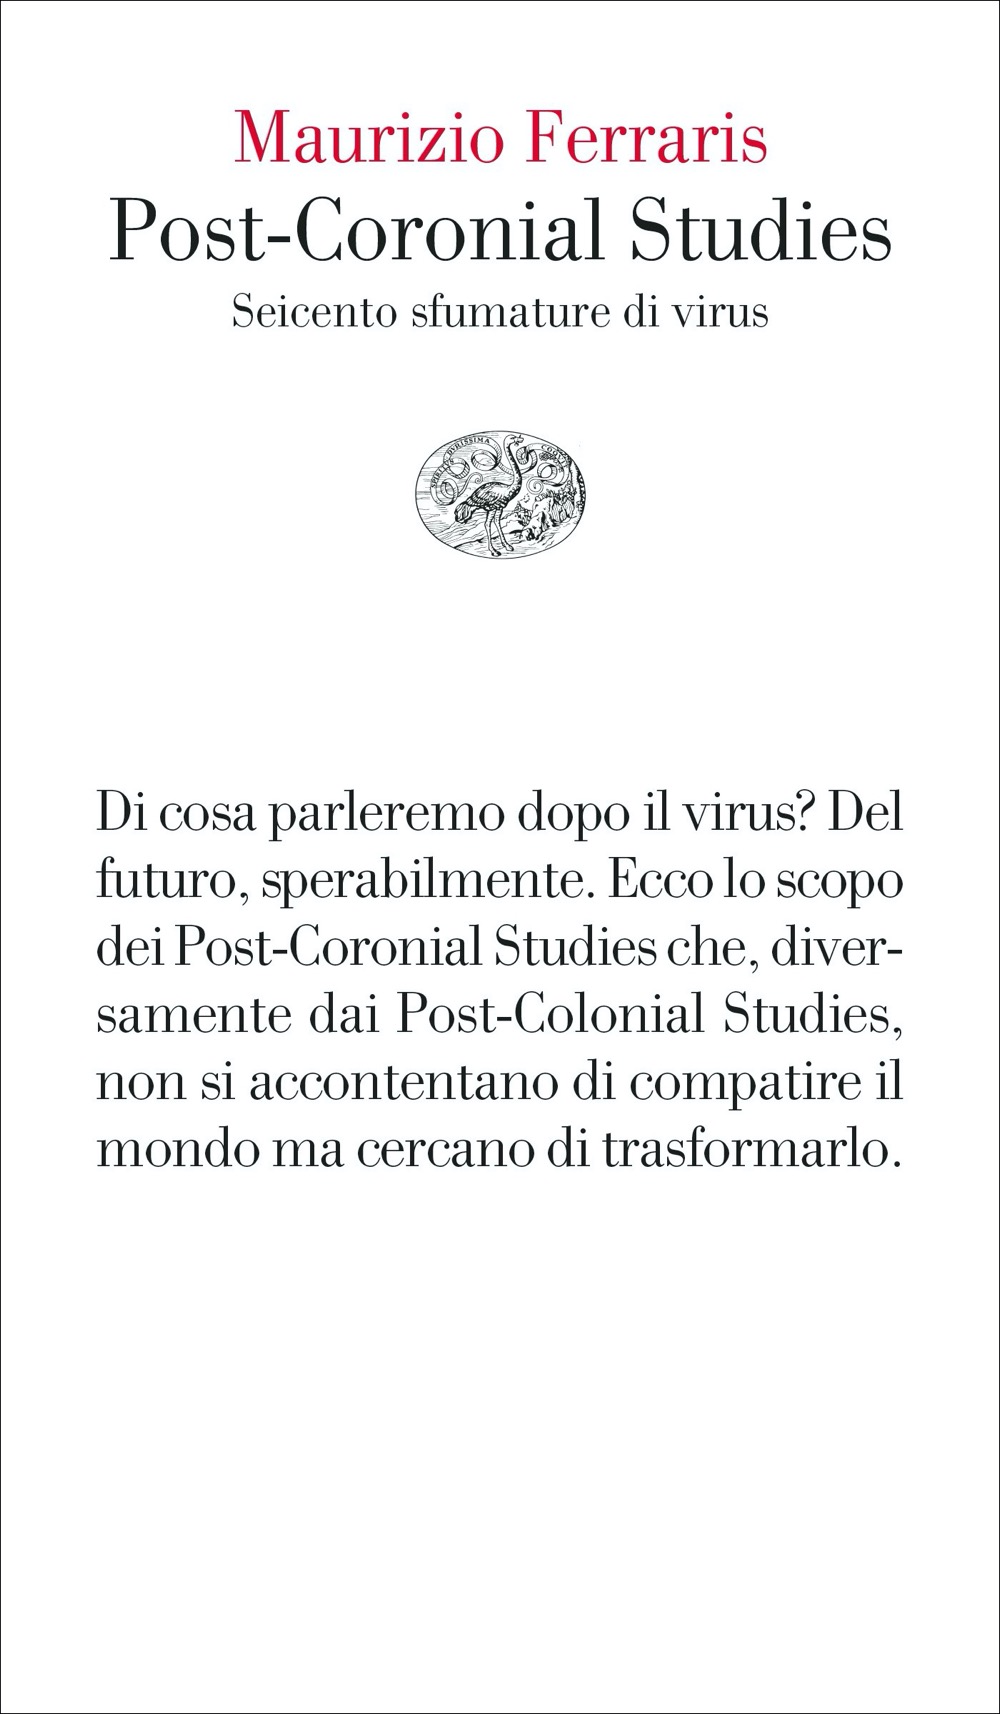 Post-Coronial Studies, Maurizio Ferraris. Giulio Einaudi editore - Vele